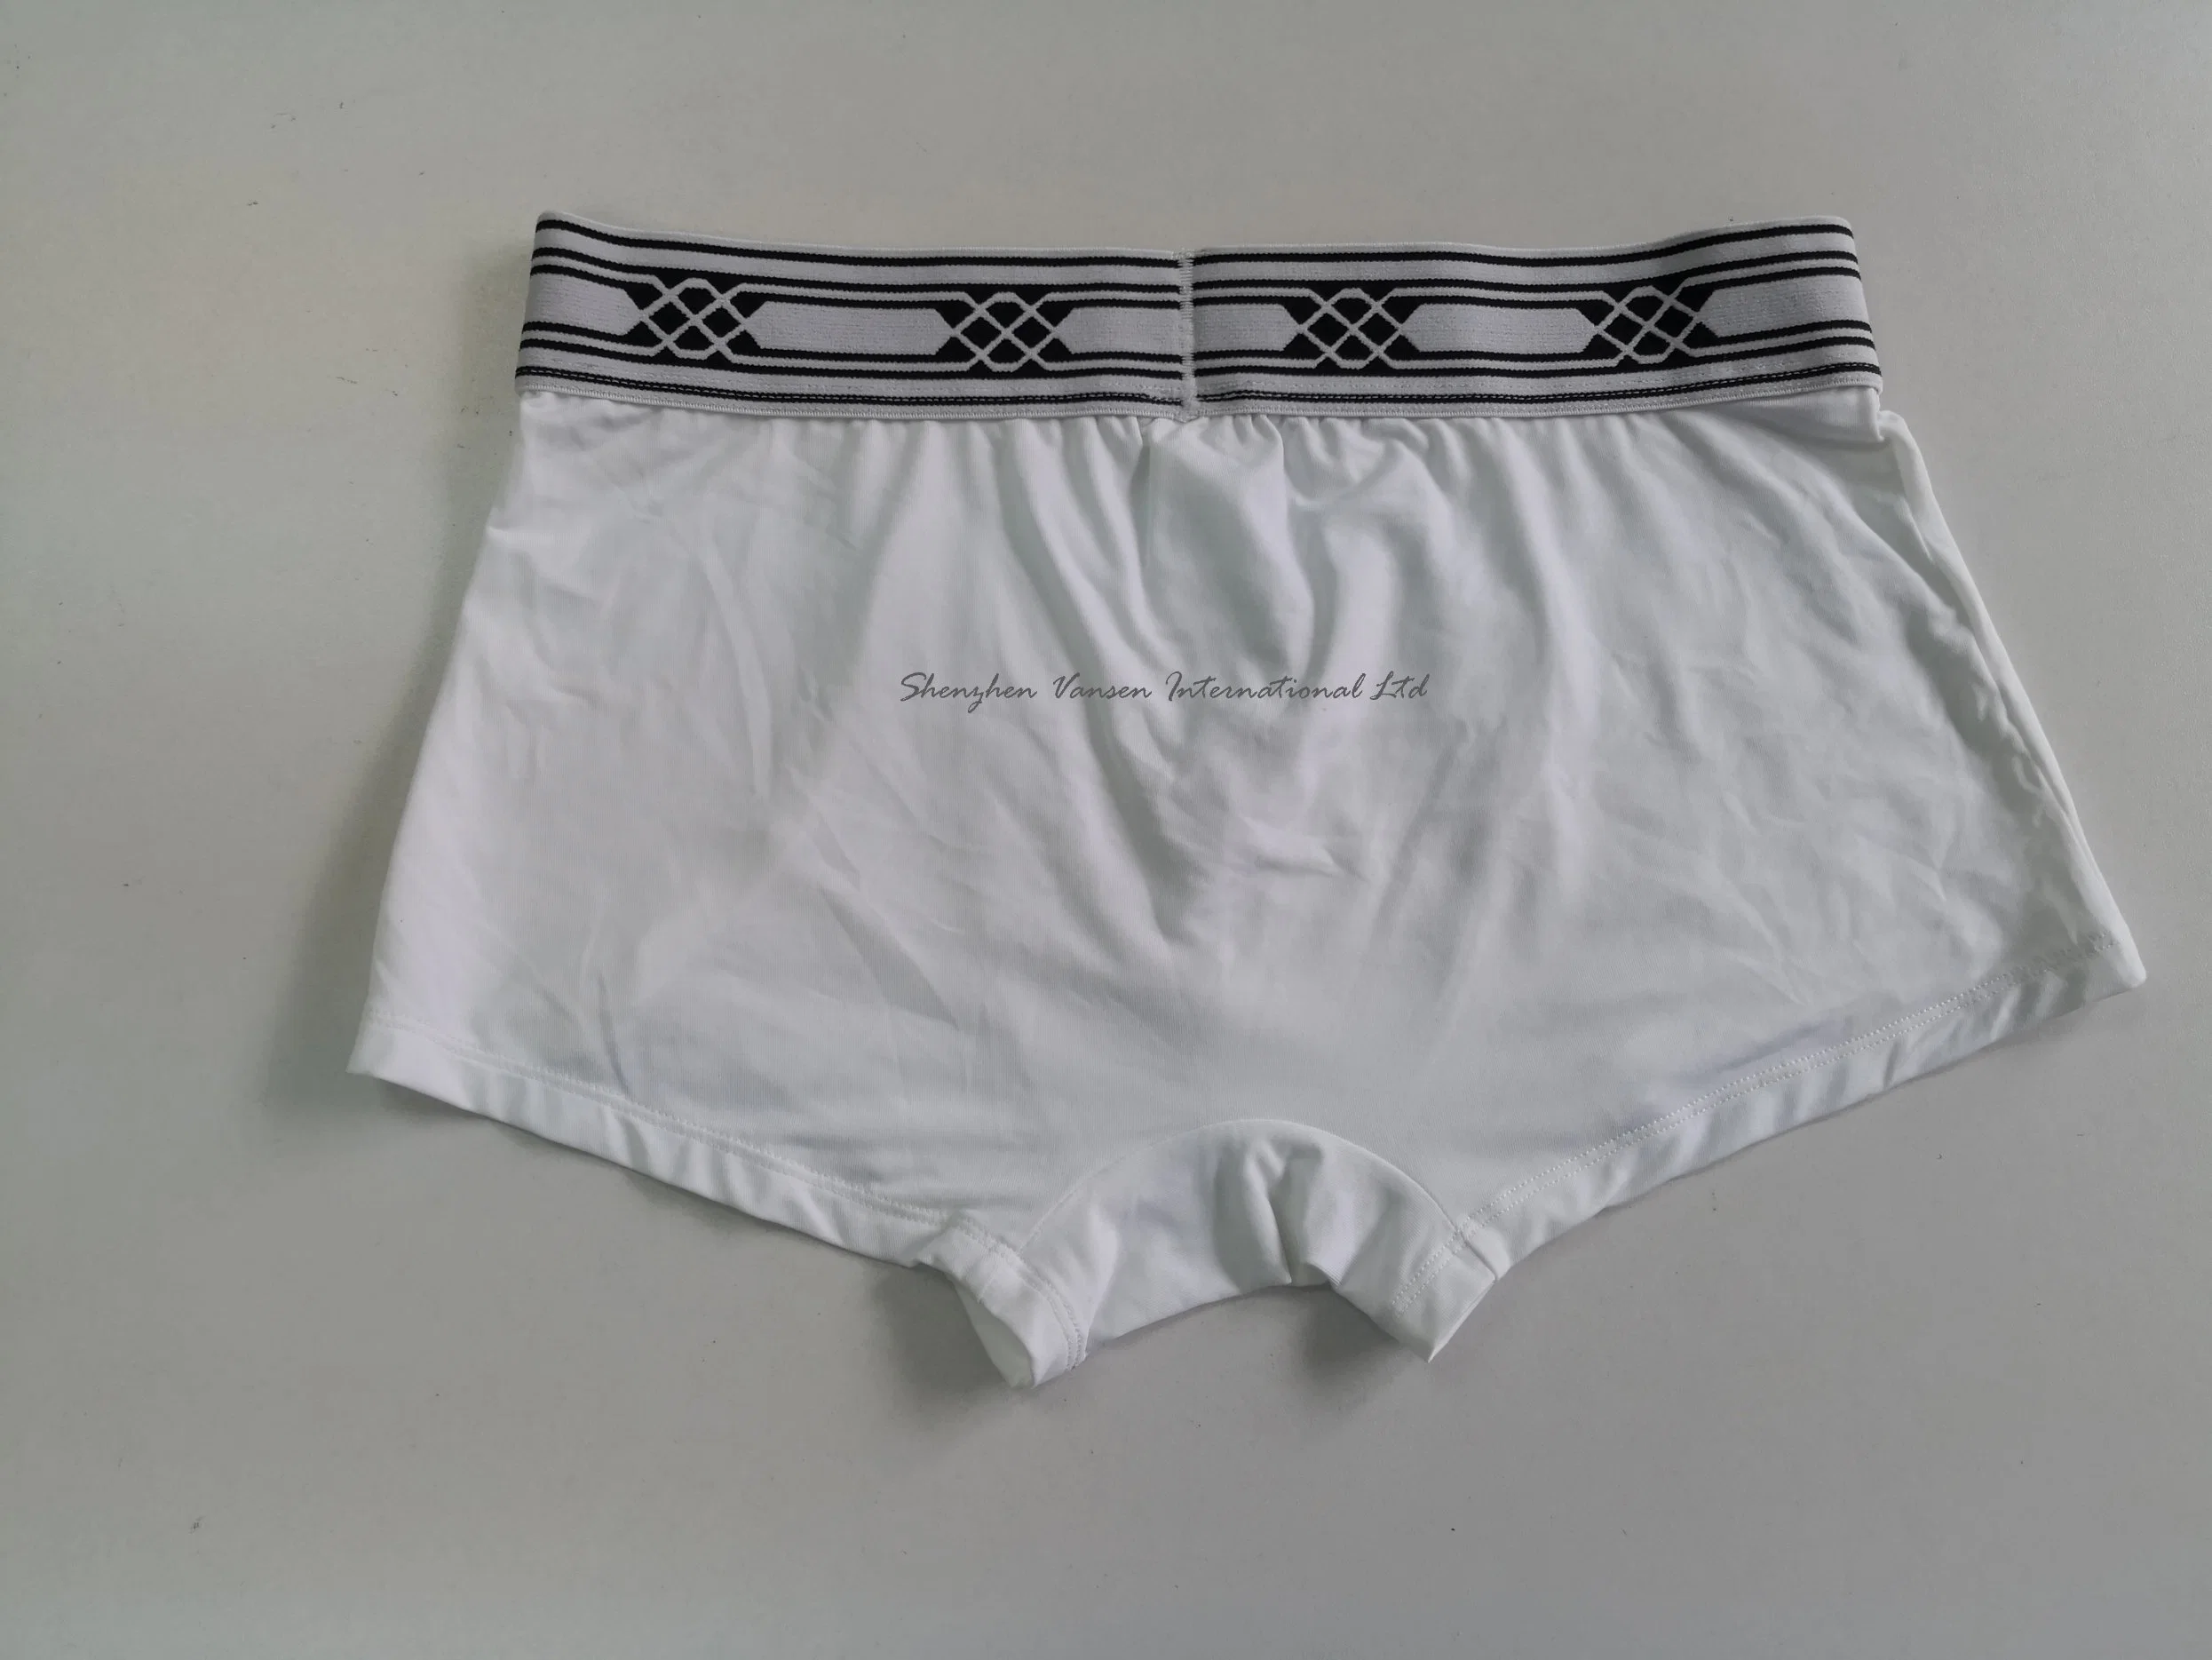 Wnite Men's Summer Boxer/Pants/Underwear Shorts